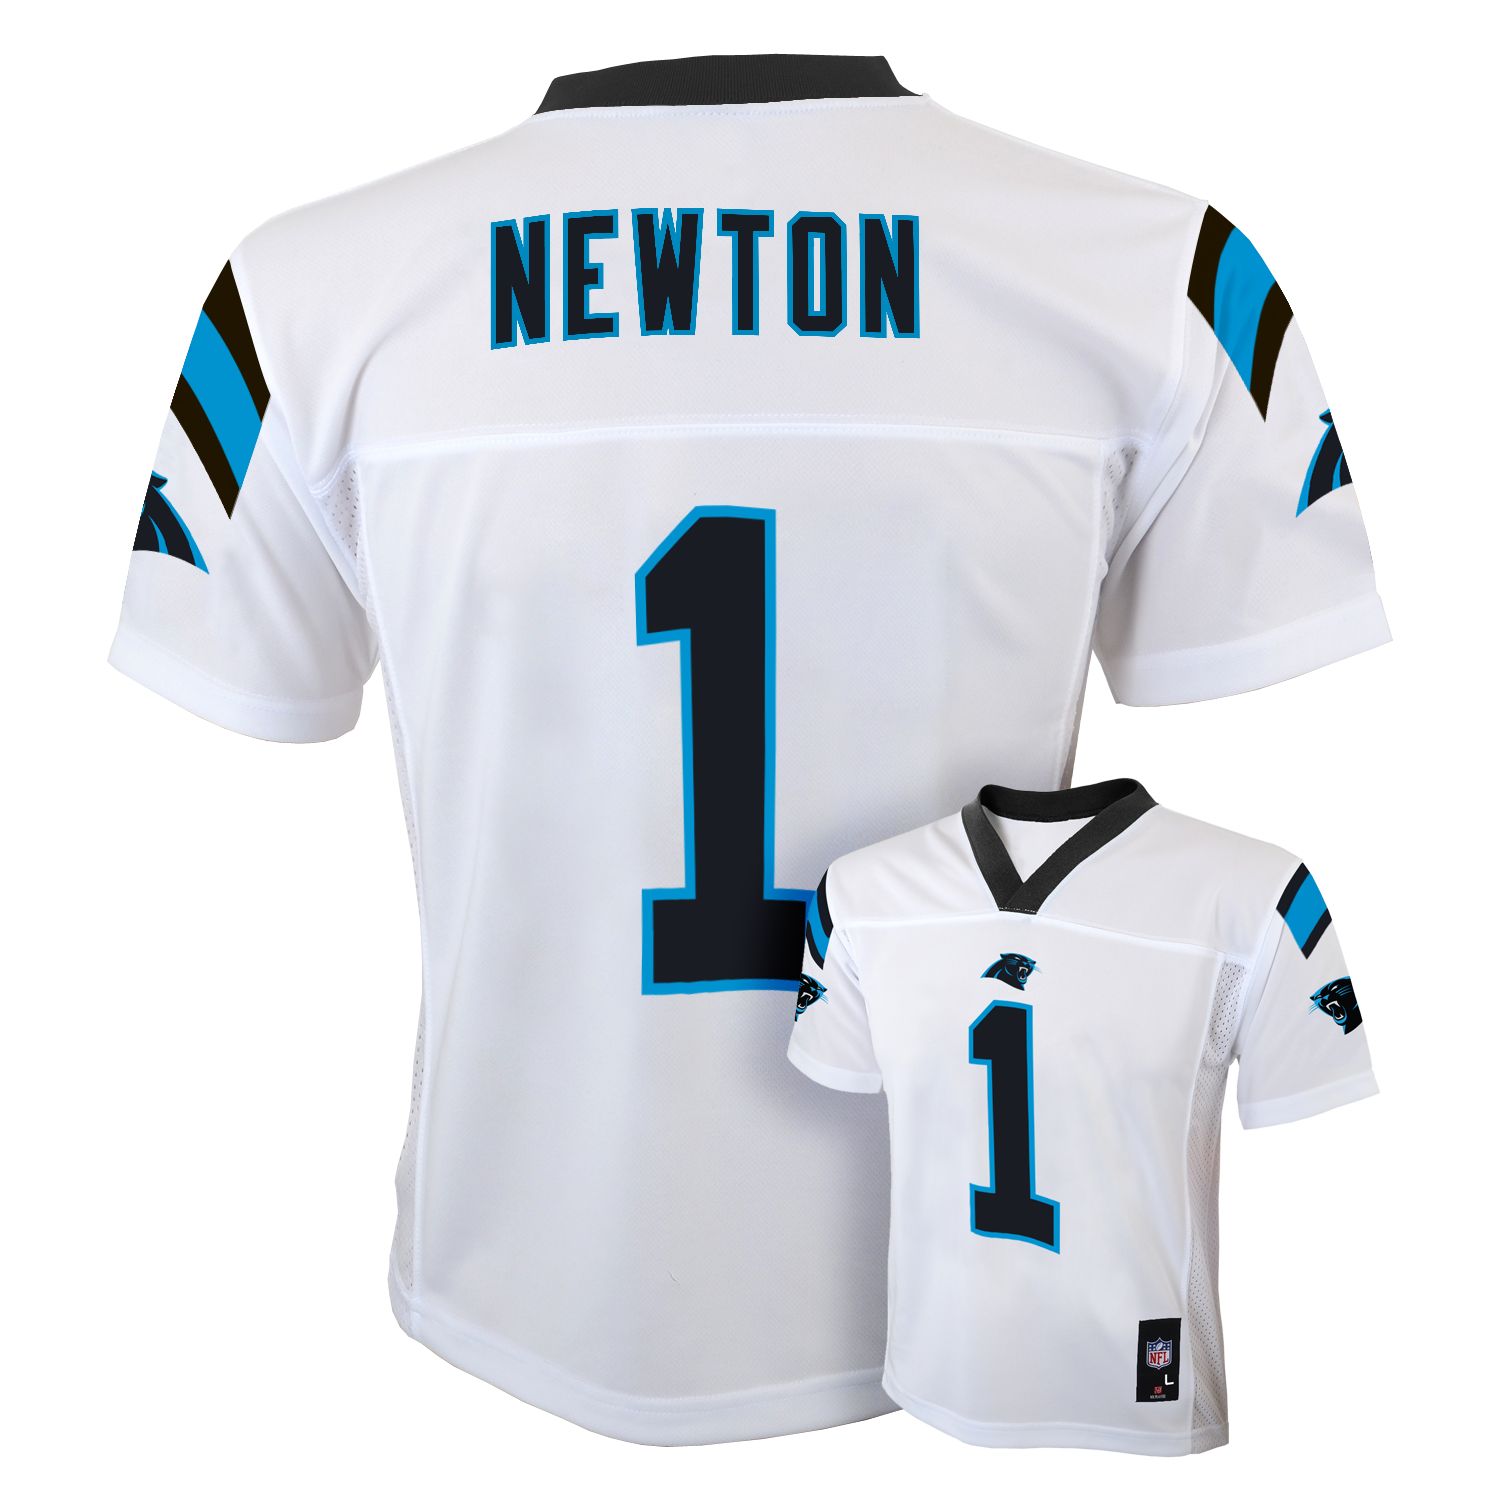 cam newton's jersey